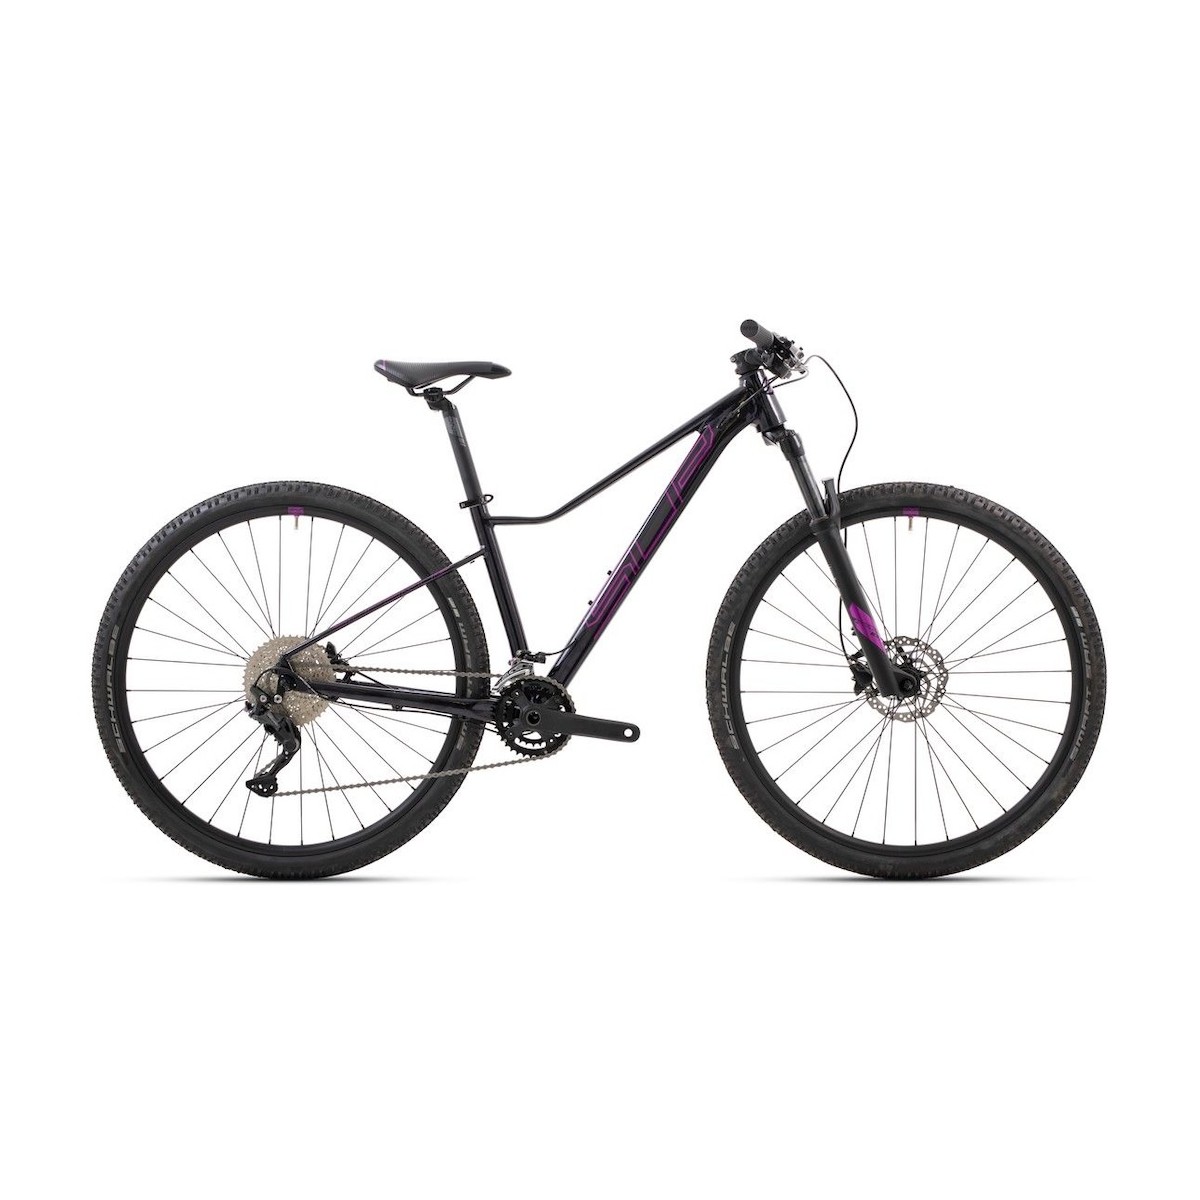 SUPERIOR XC 879 W 29 womens bike - black rainbow/purple - 2022